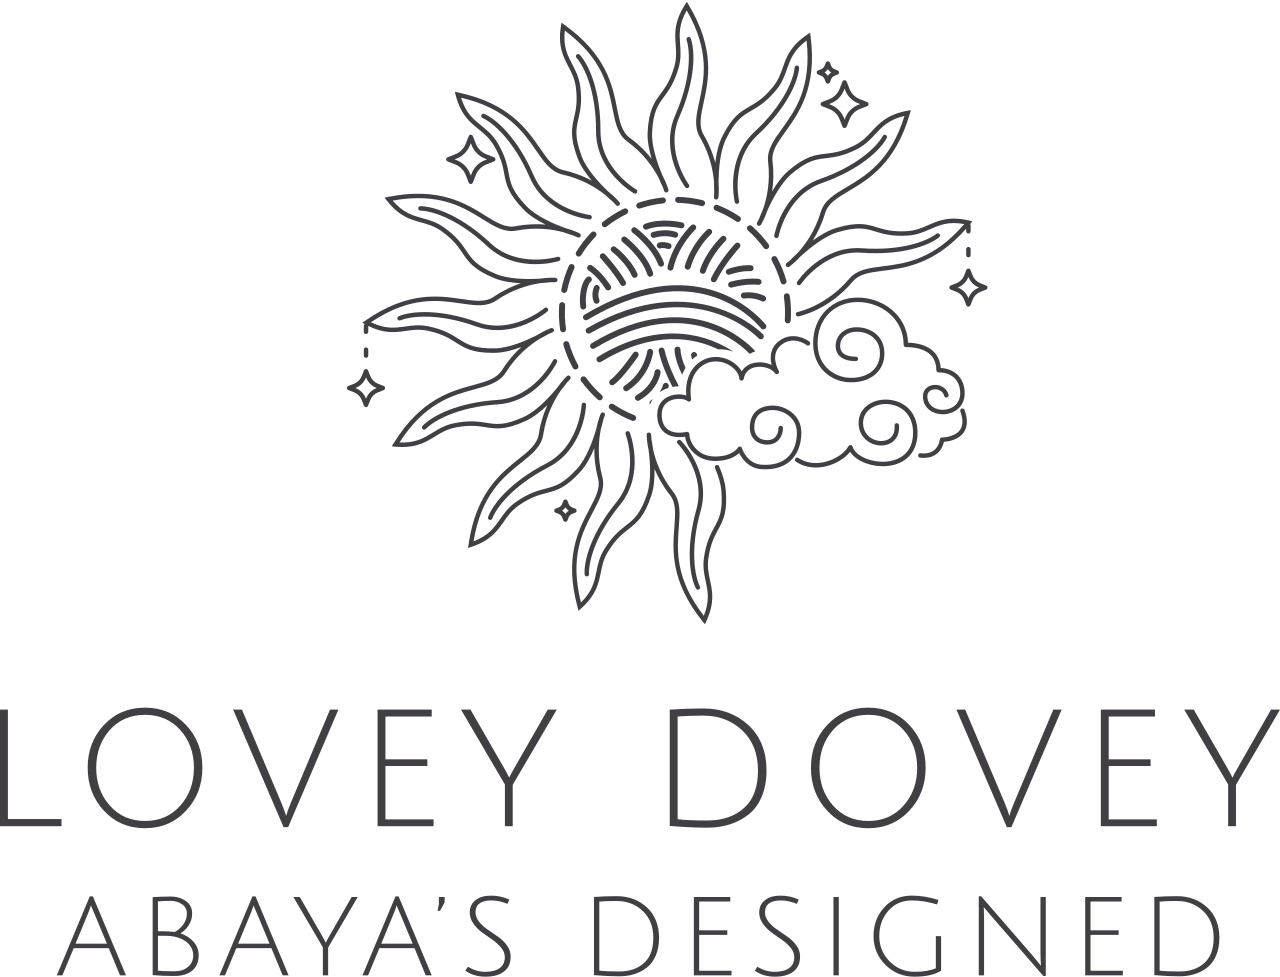 LOVEY DOVEY 's logo